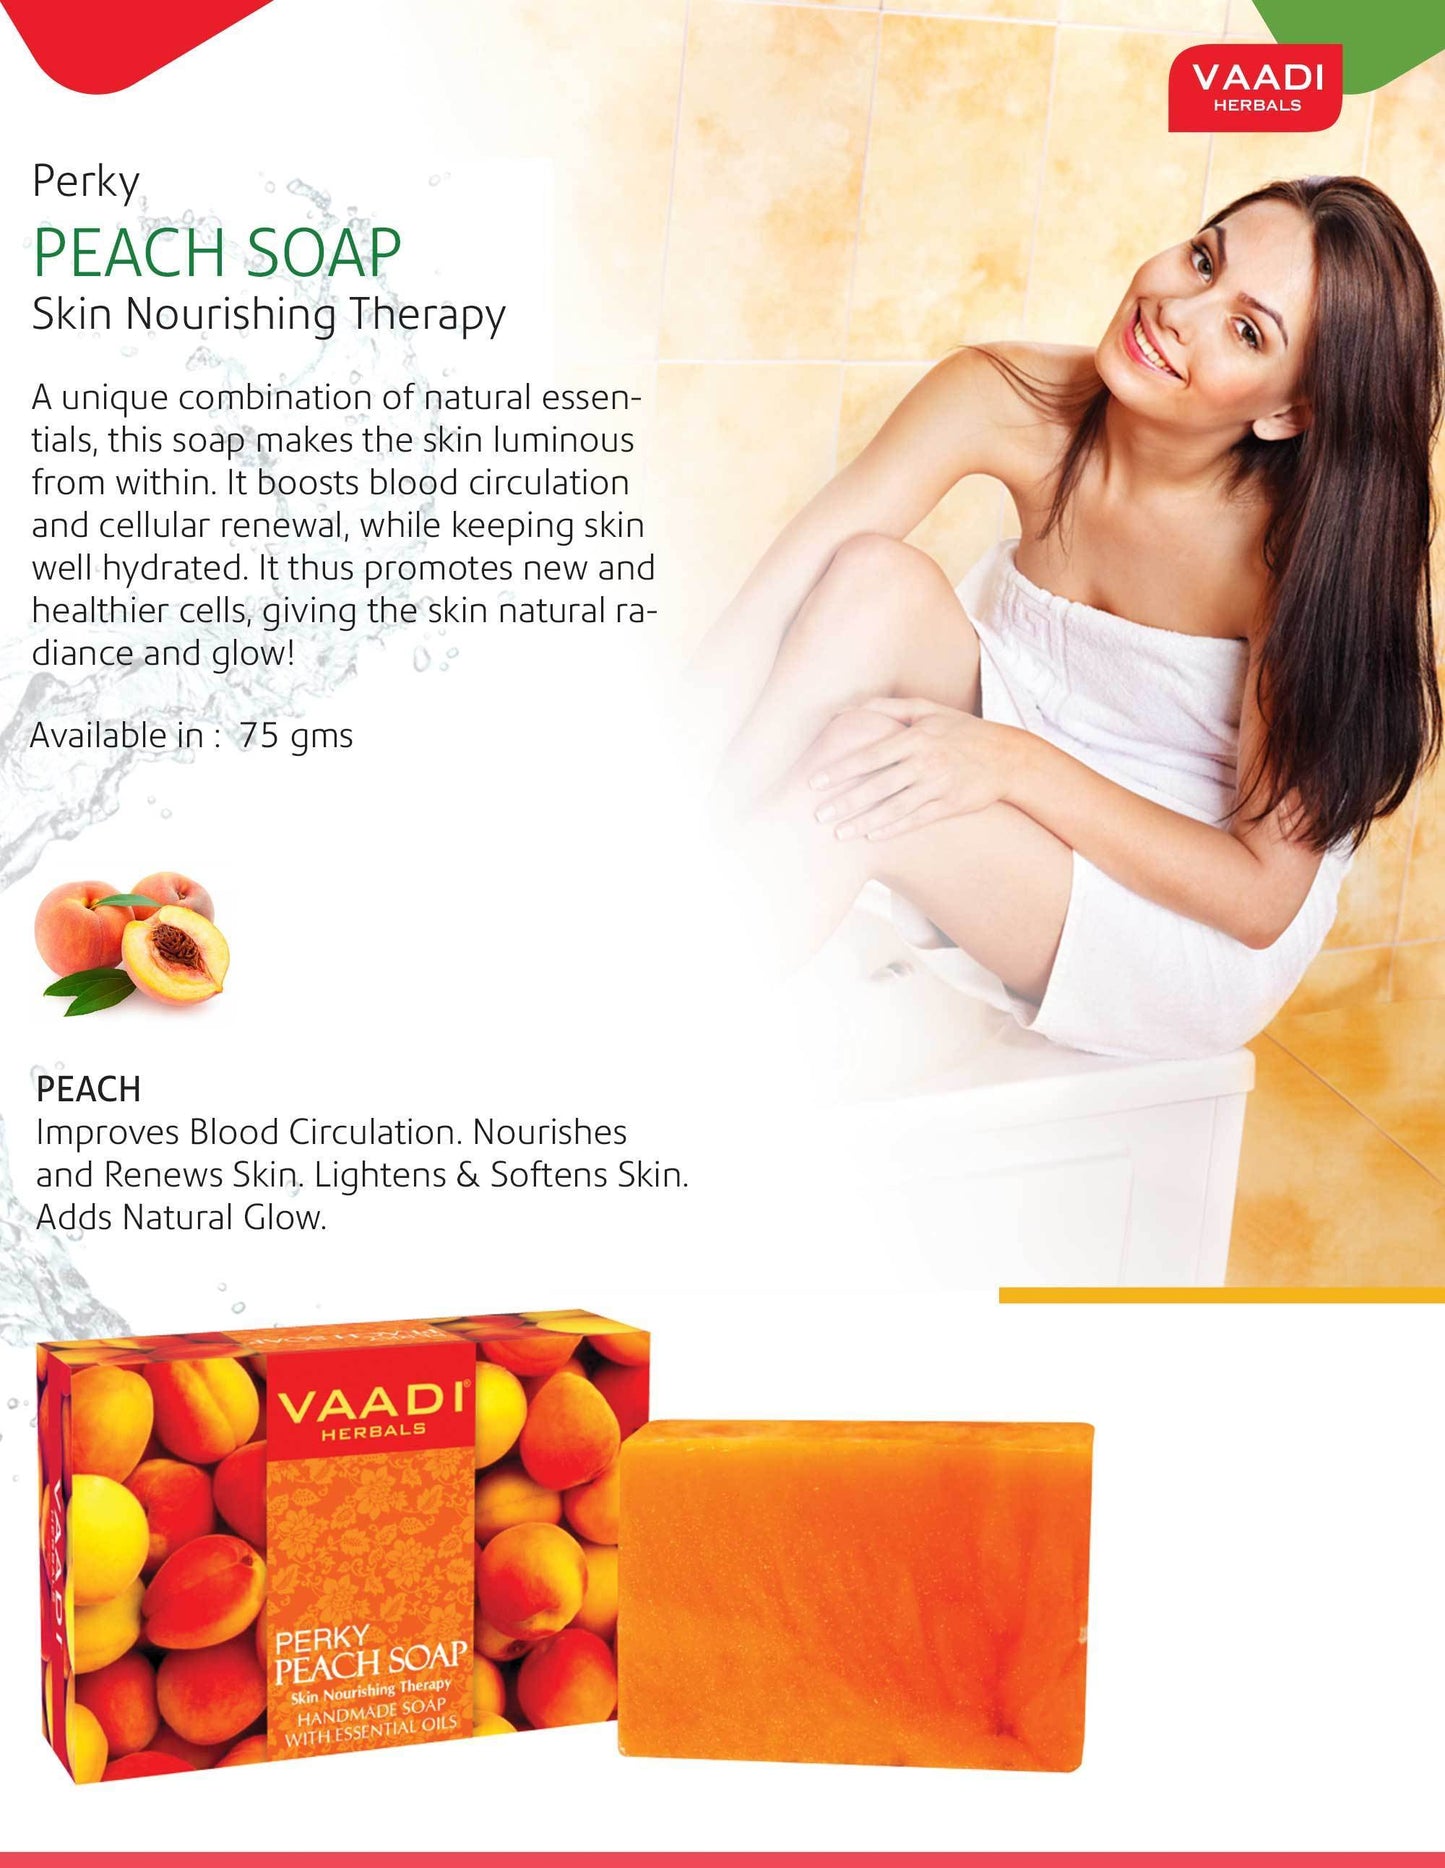 Organic Perky Peach Soap with Almond Oil - Skin Nourishing - Rehydrates (12 x 75 gms / 2.7 oz)